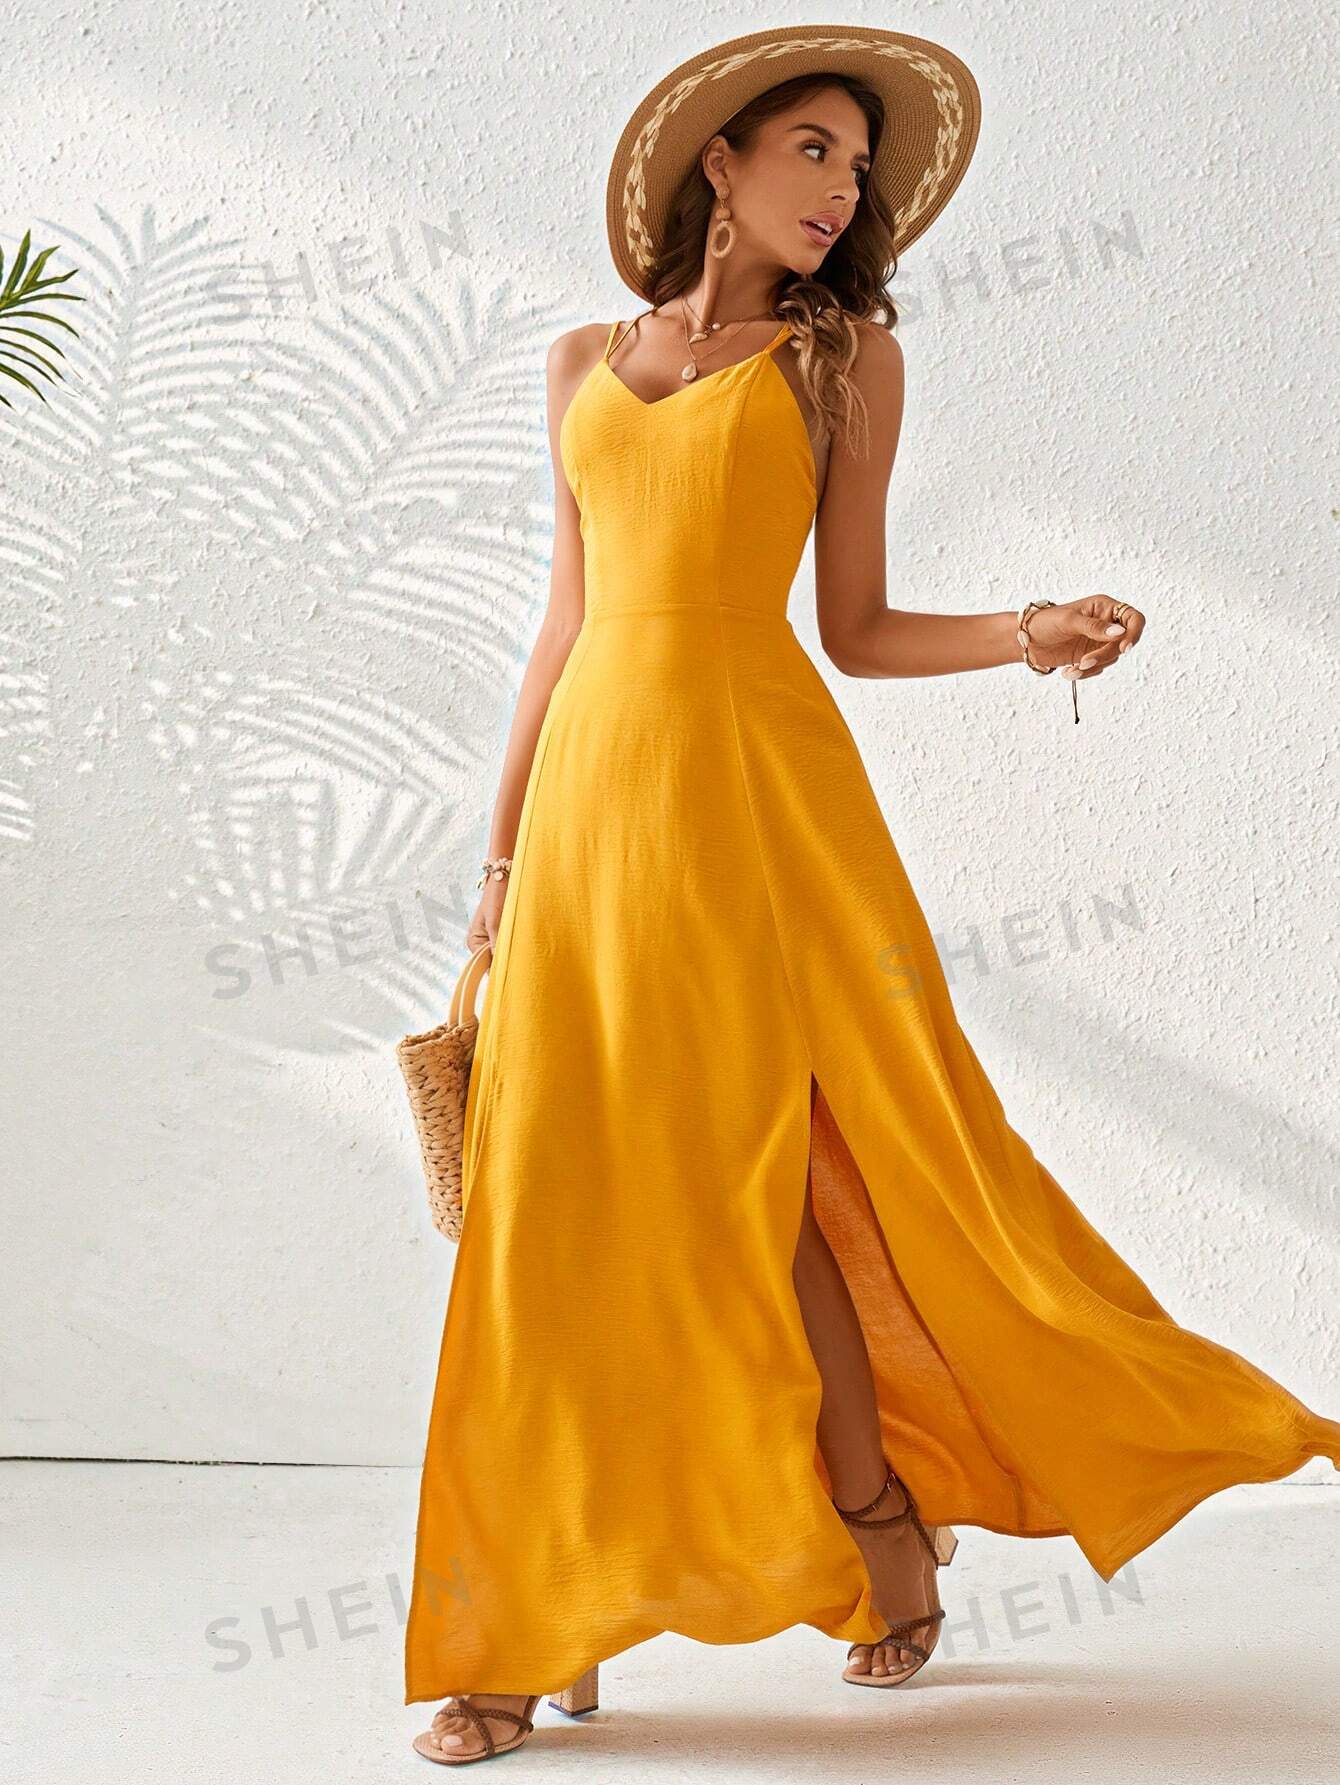 SHEIN VCAY SHEIN Vcay однотонное женское платье макси в стиле отпуска в стиле кантри для концерта в стиле кантри, желтый женское однотонное платье во французском стиле